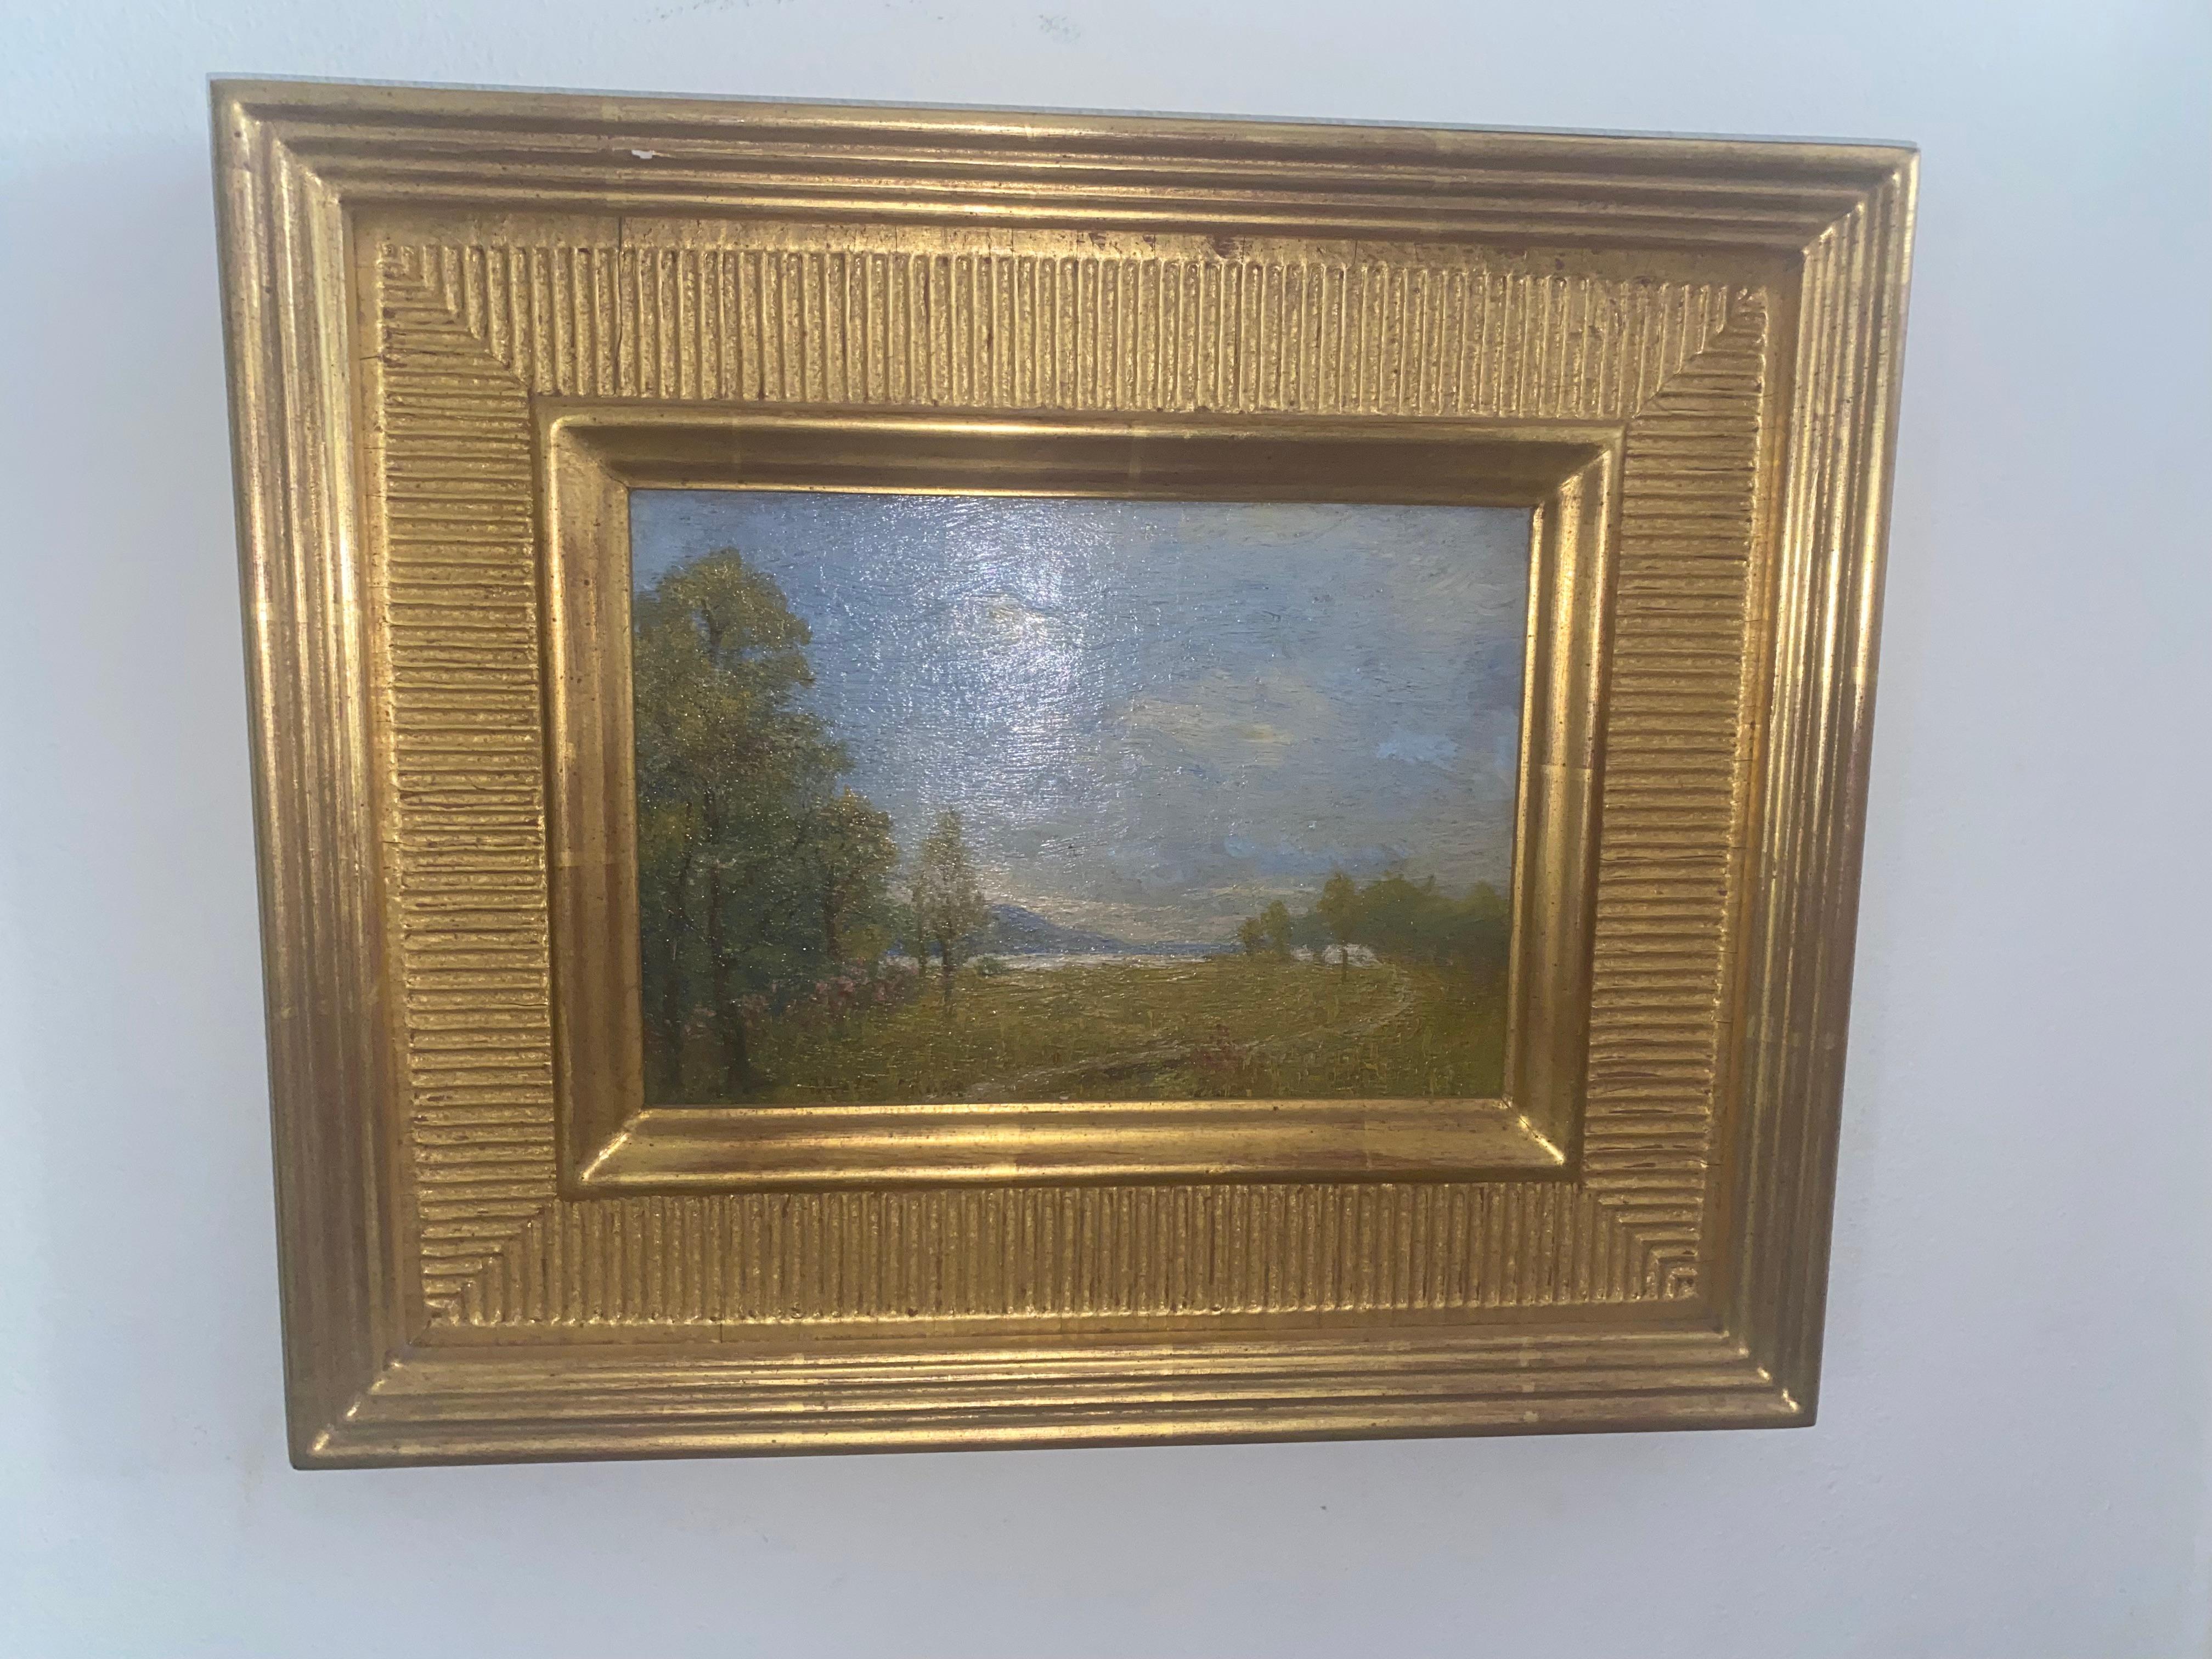 Bruce Crane Paar amerikanische impressionistische Landschaftsgemälde in vergoldeten Rahmen.  Signiert unten links.
Mit Rahmen: 13,25